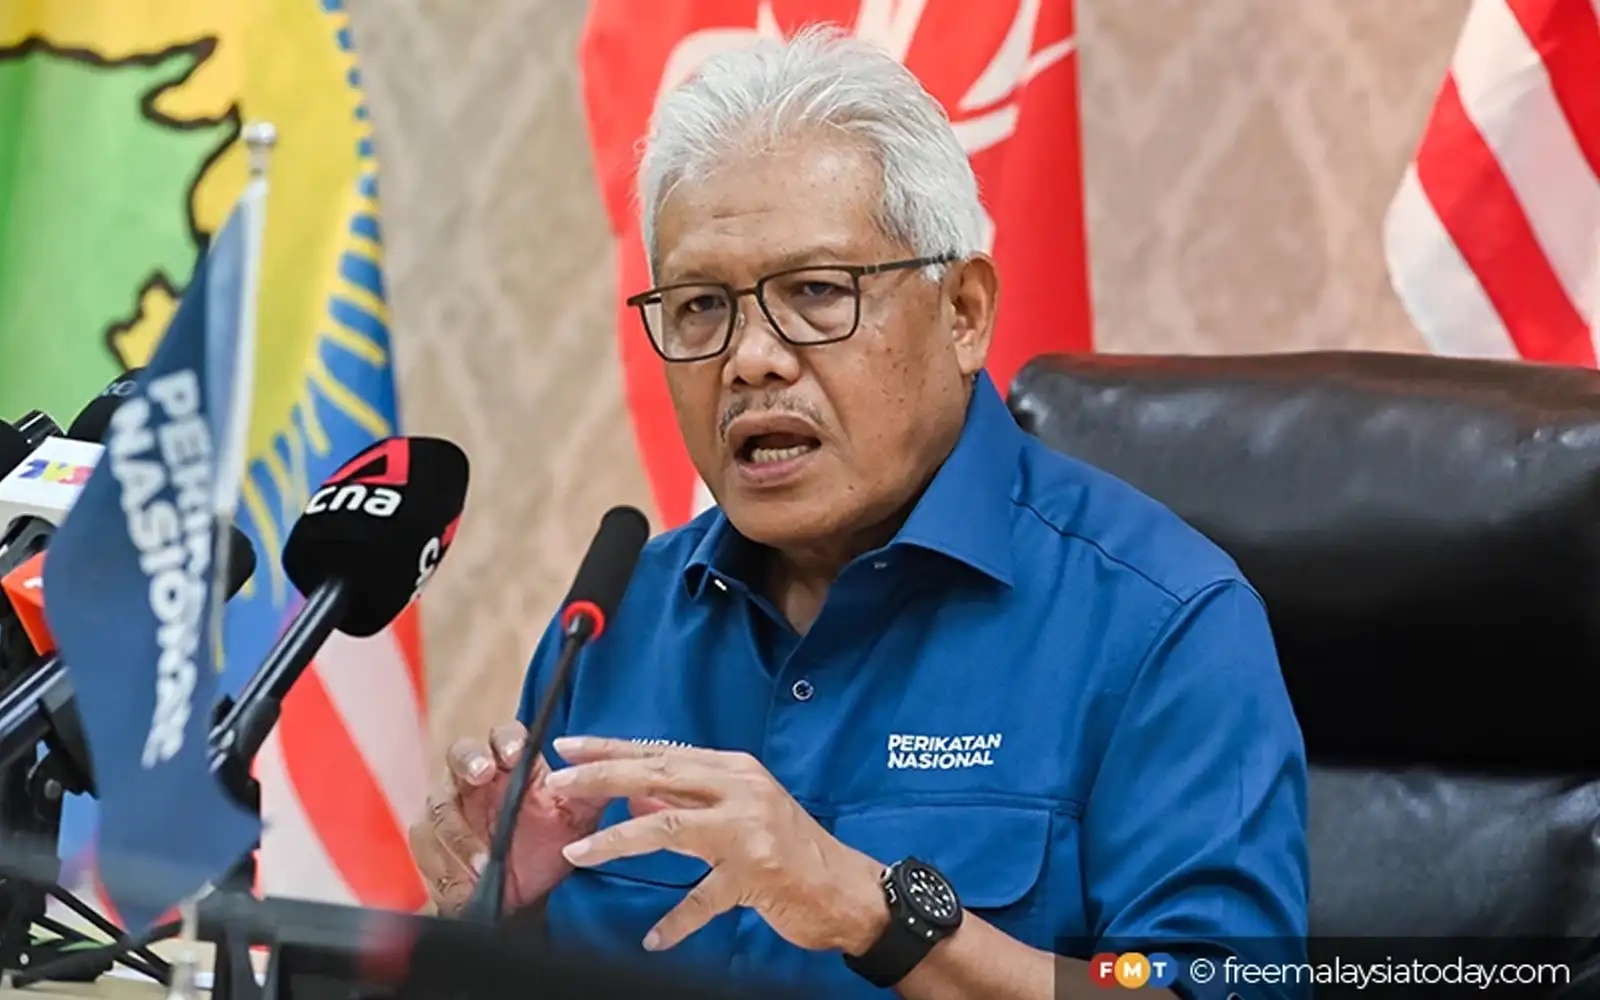 6 bersatu mps, state rep to know fate after kuala kubu baharu polls